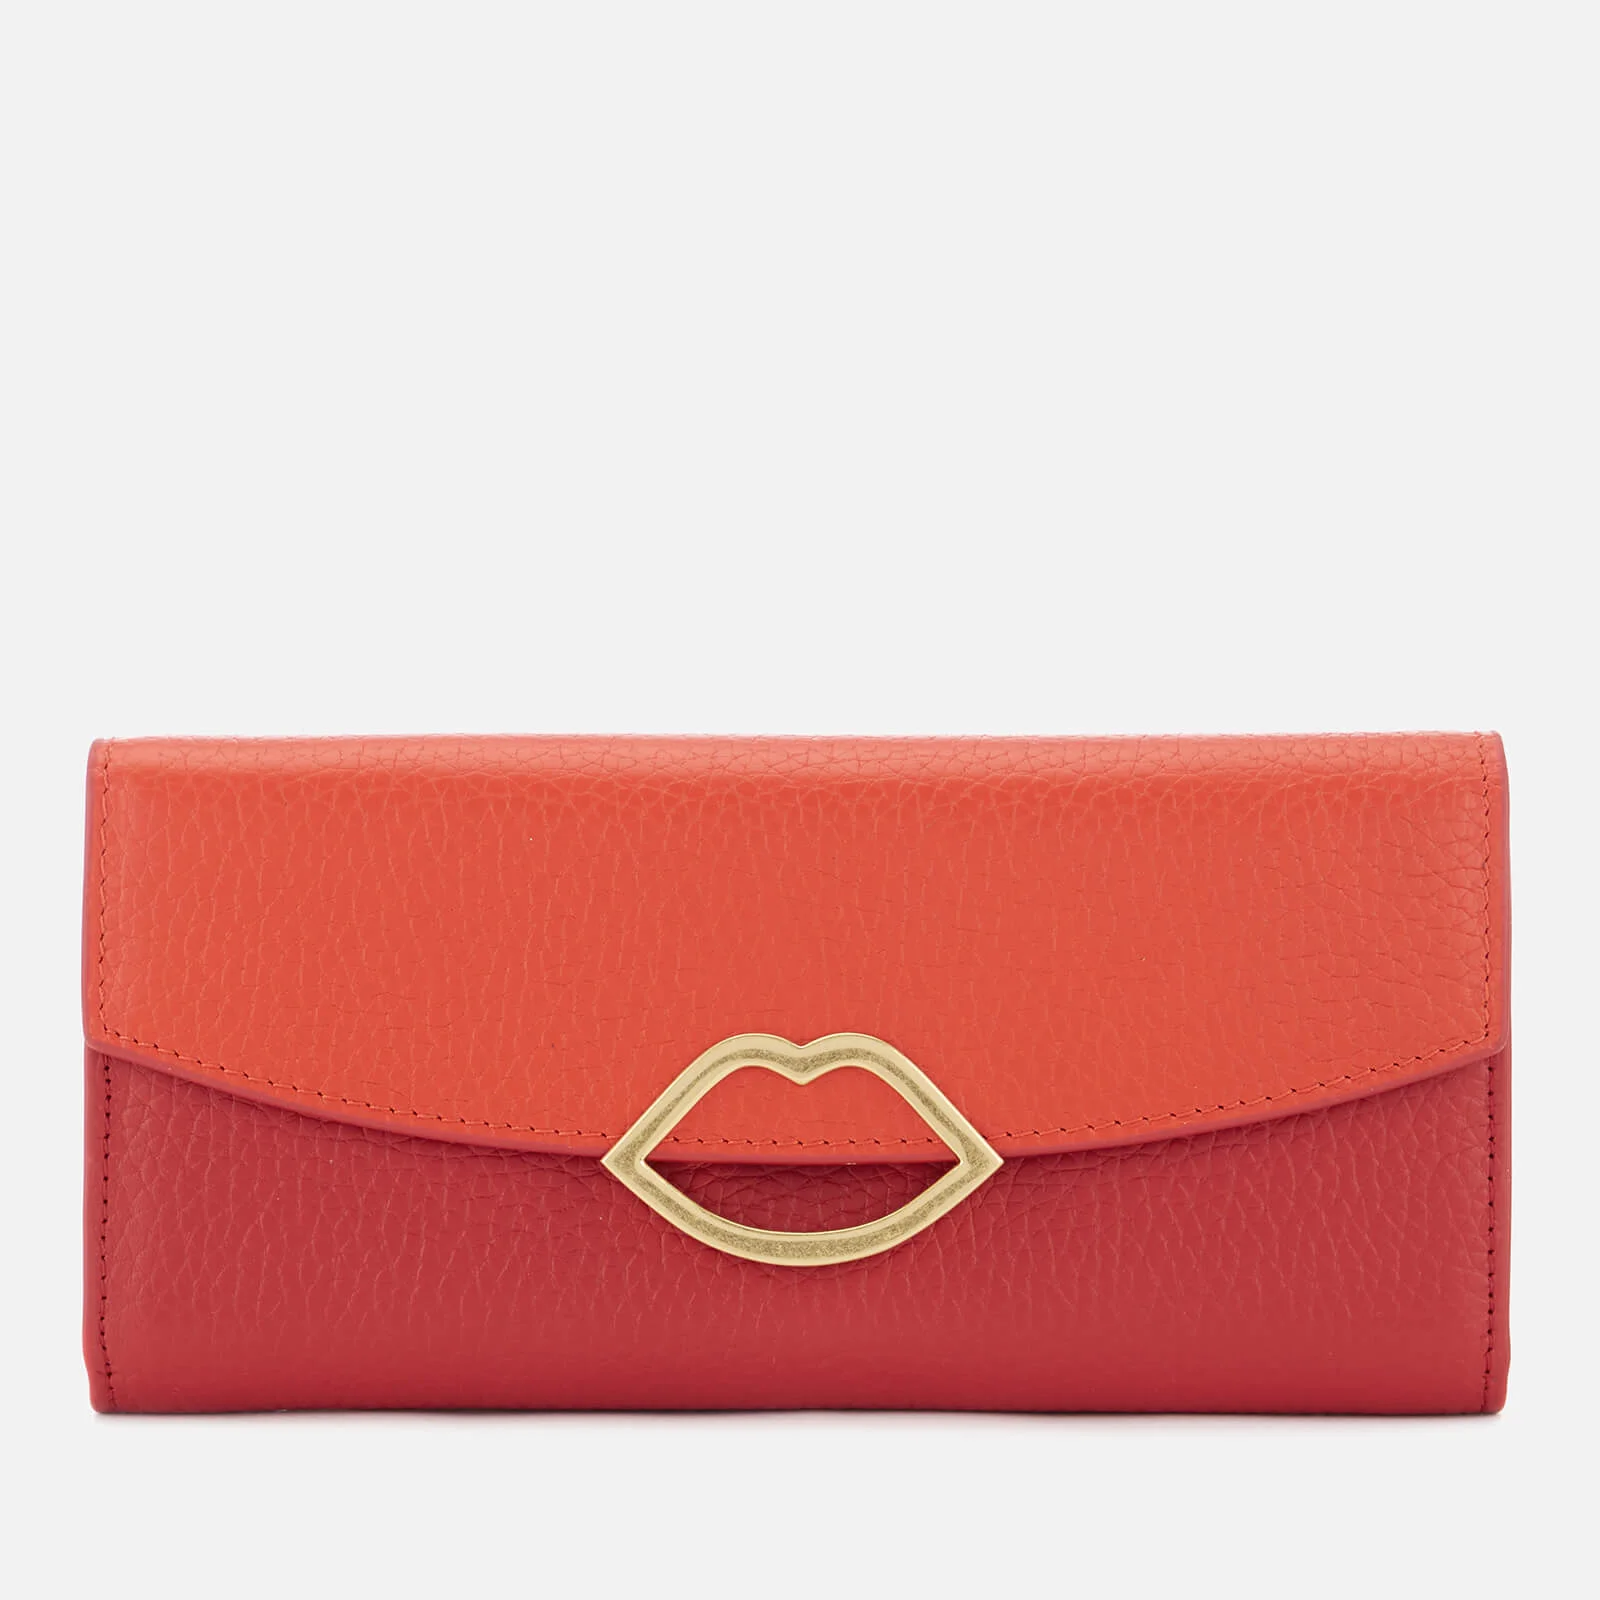 Lulu Guinness Women's Half Covered Lip Trisha Wallet - Orange/Red Image 1